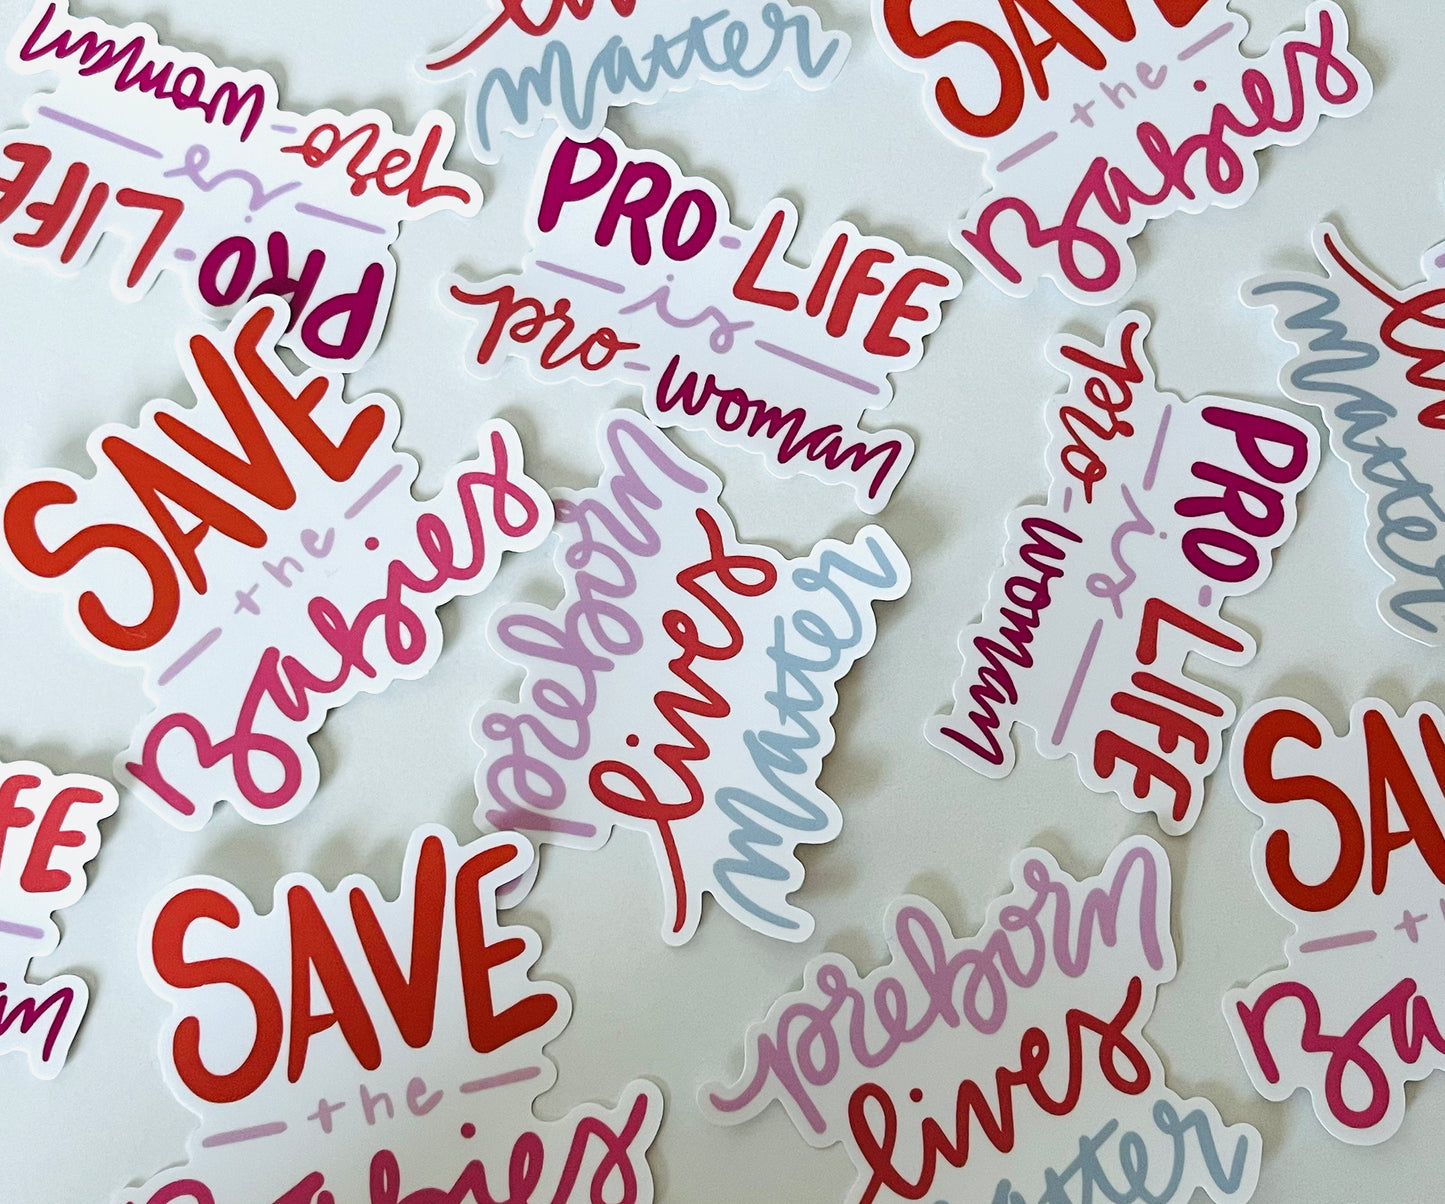 Pro-Life is Pro-Woman Sticker | Donation